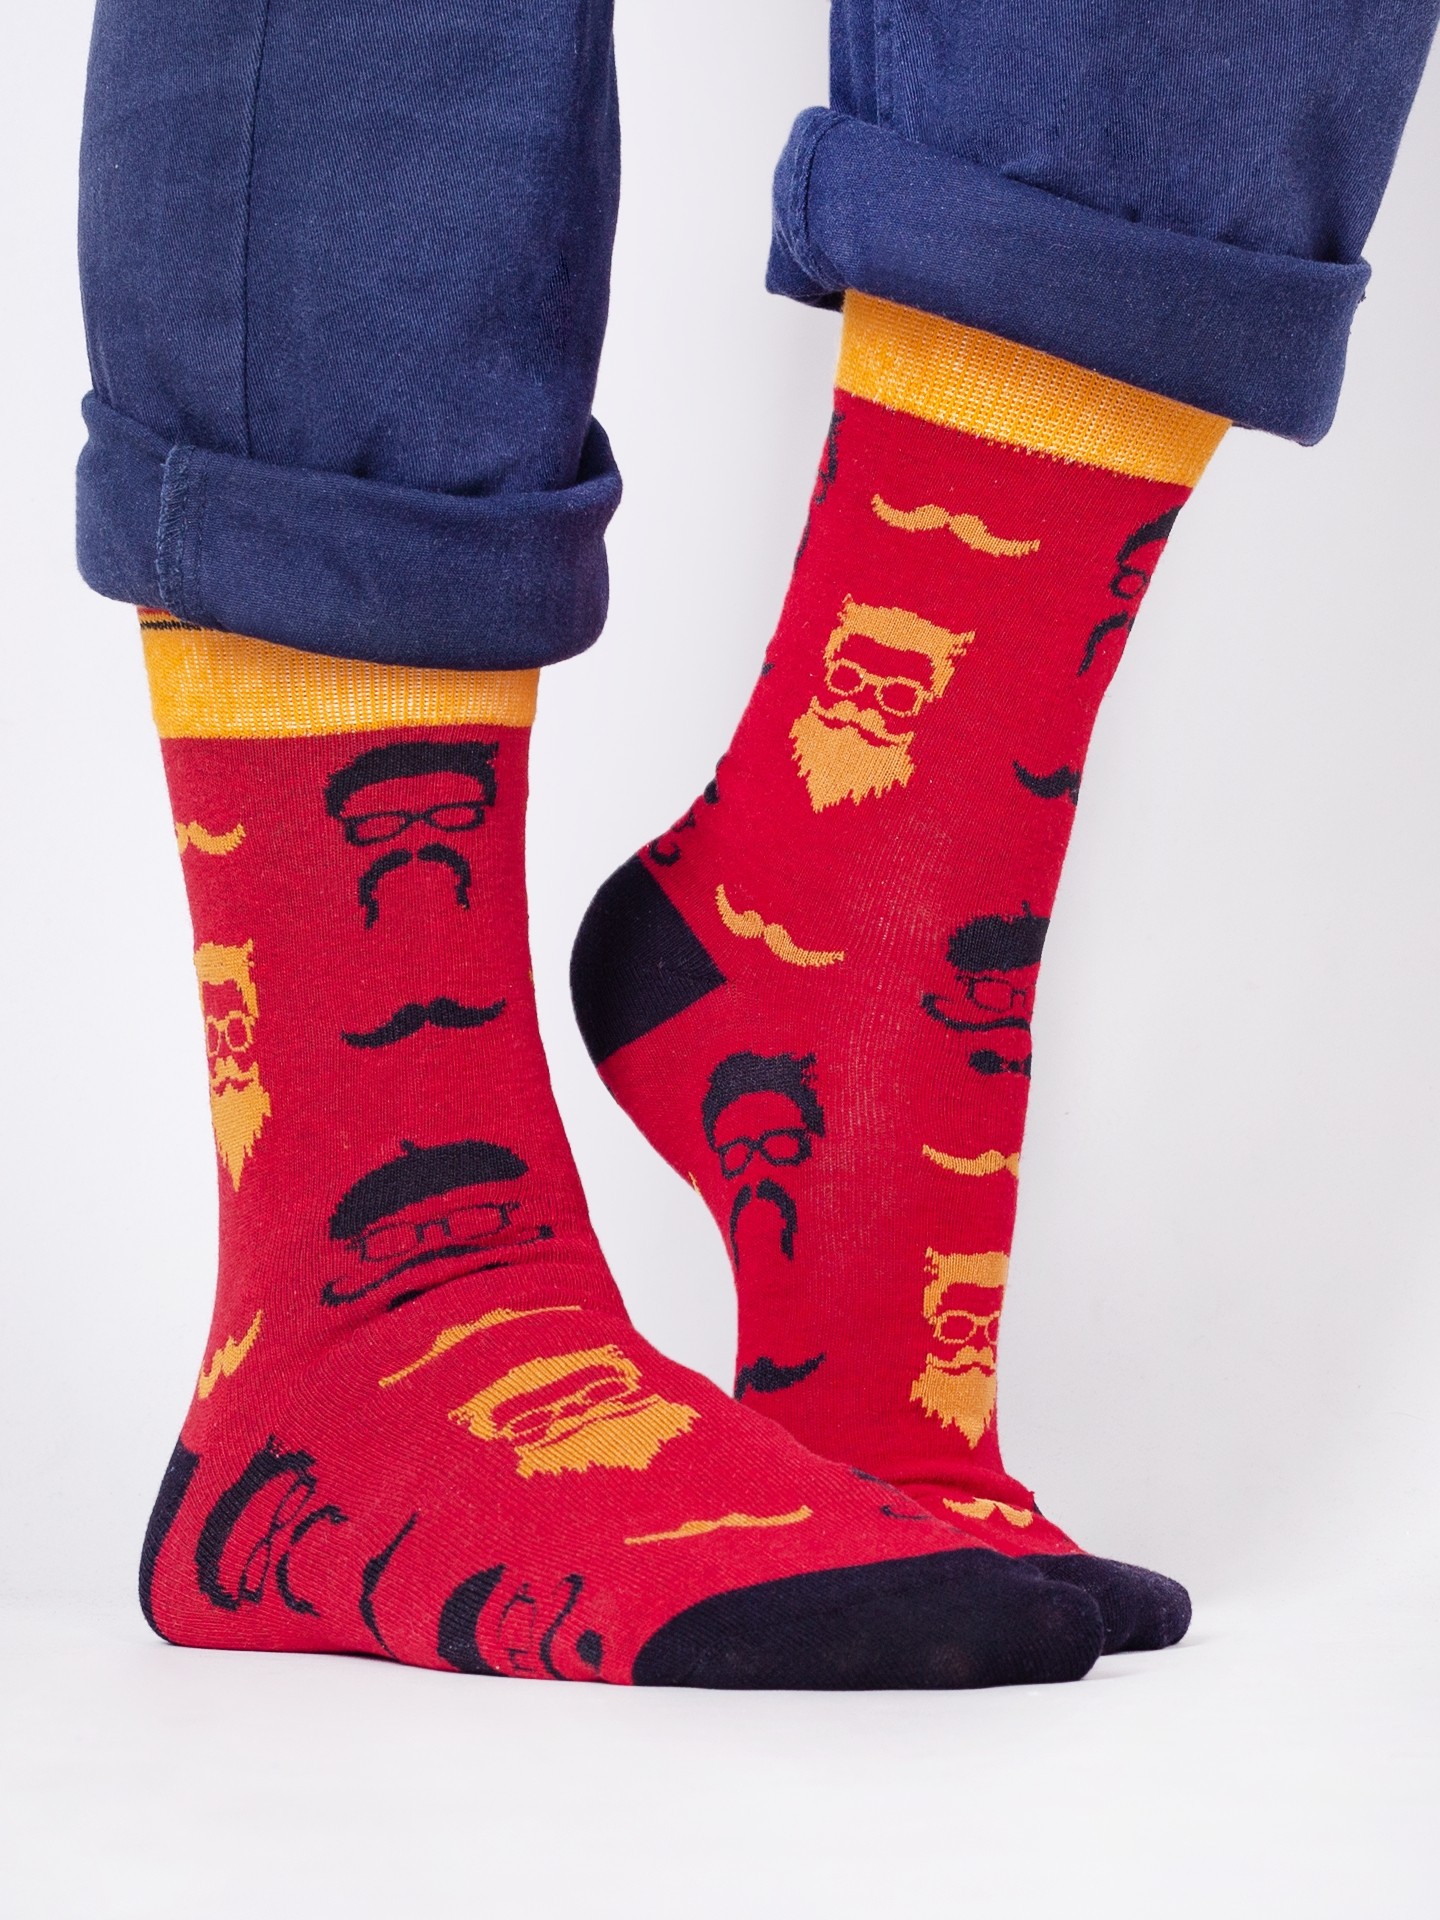 Yoclub Man's Cotton Socks Patterns Colors SKA-0054F-H400